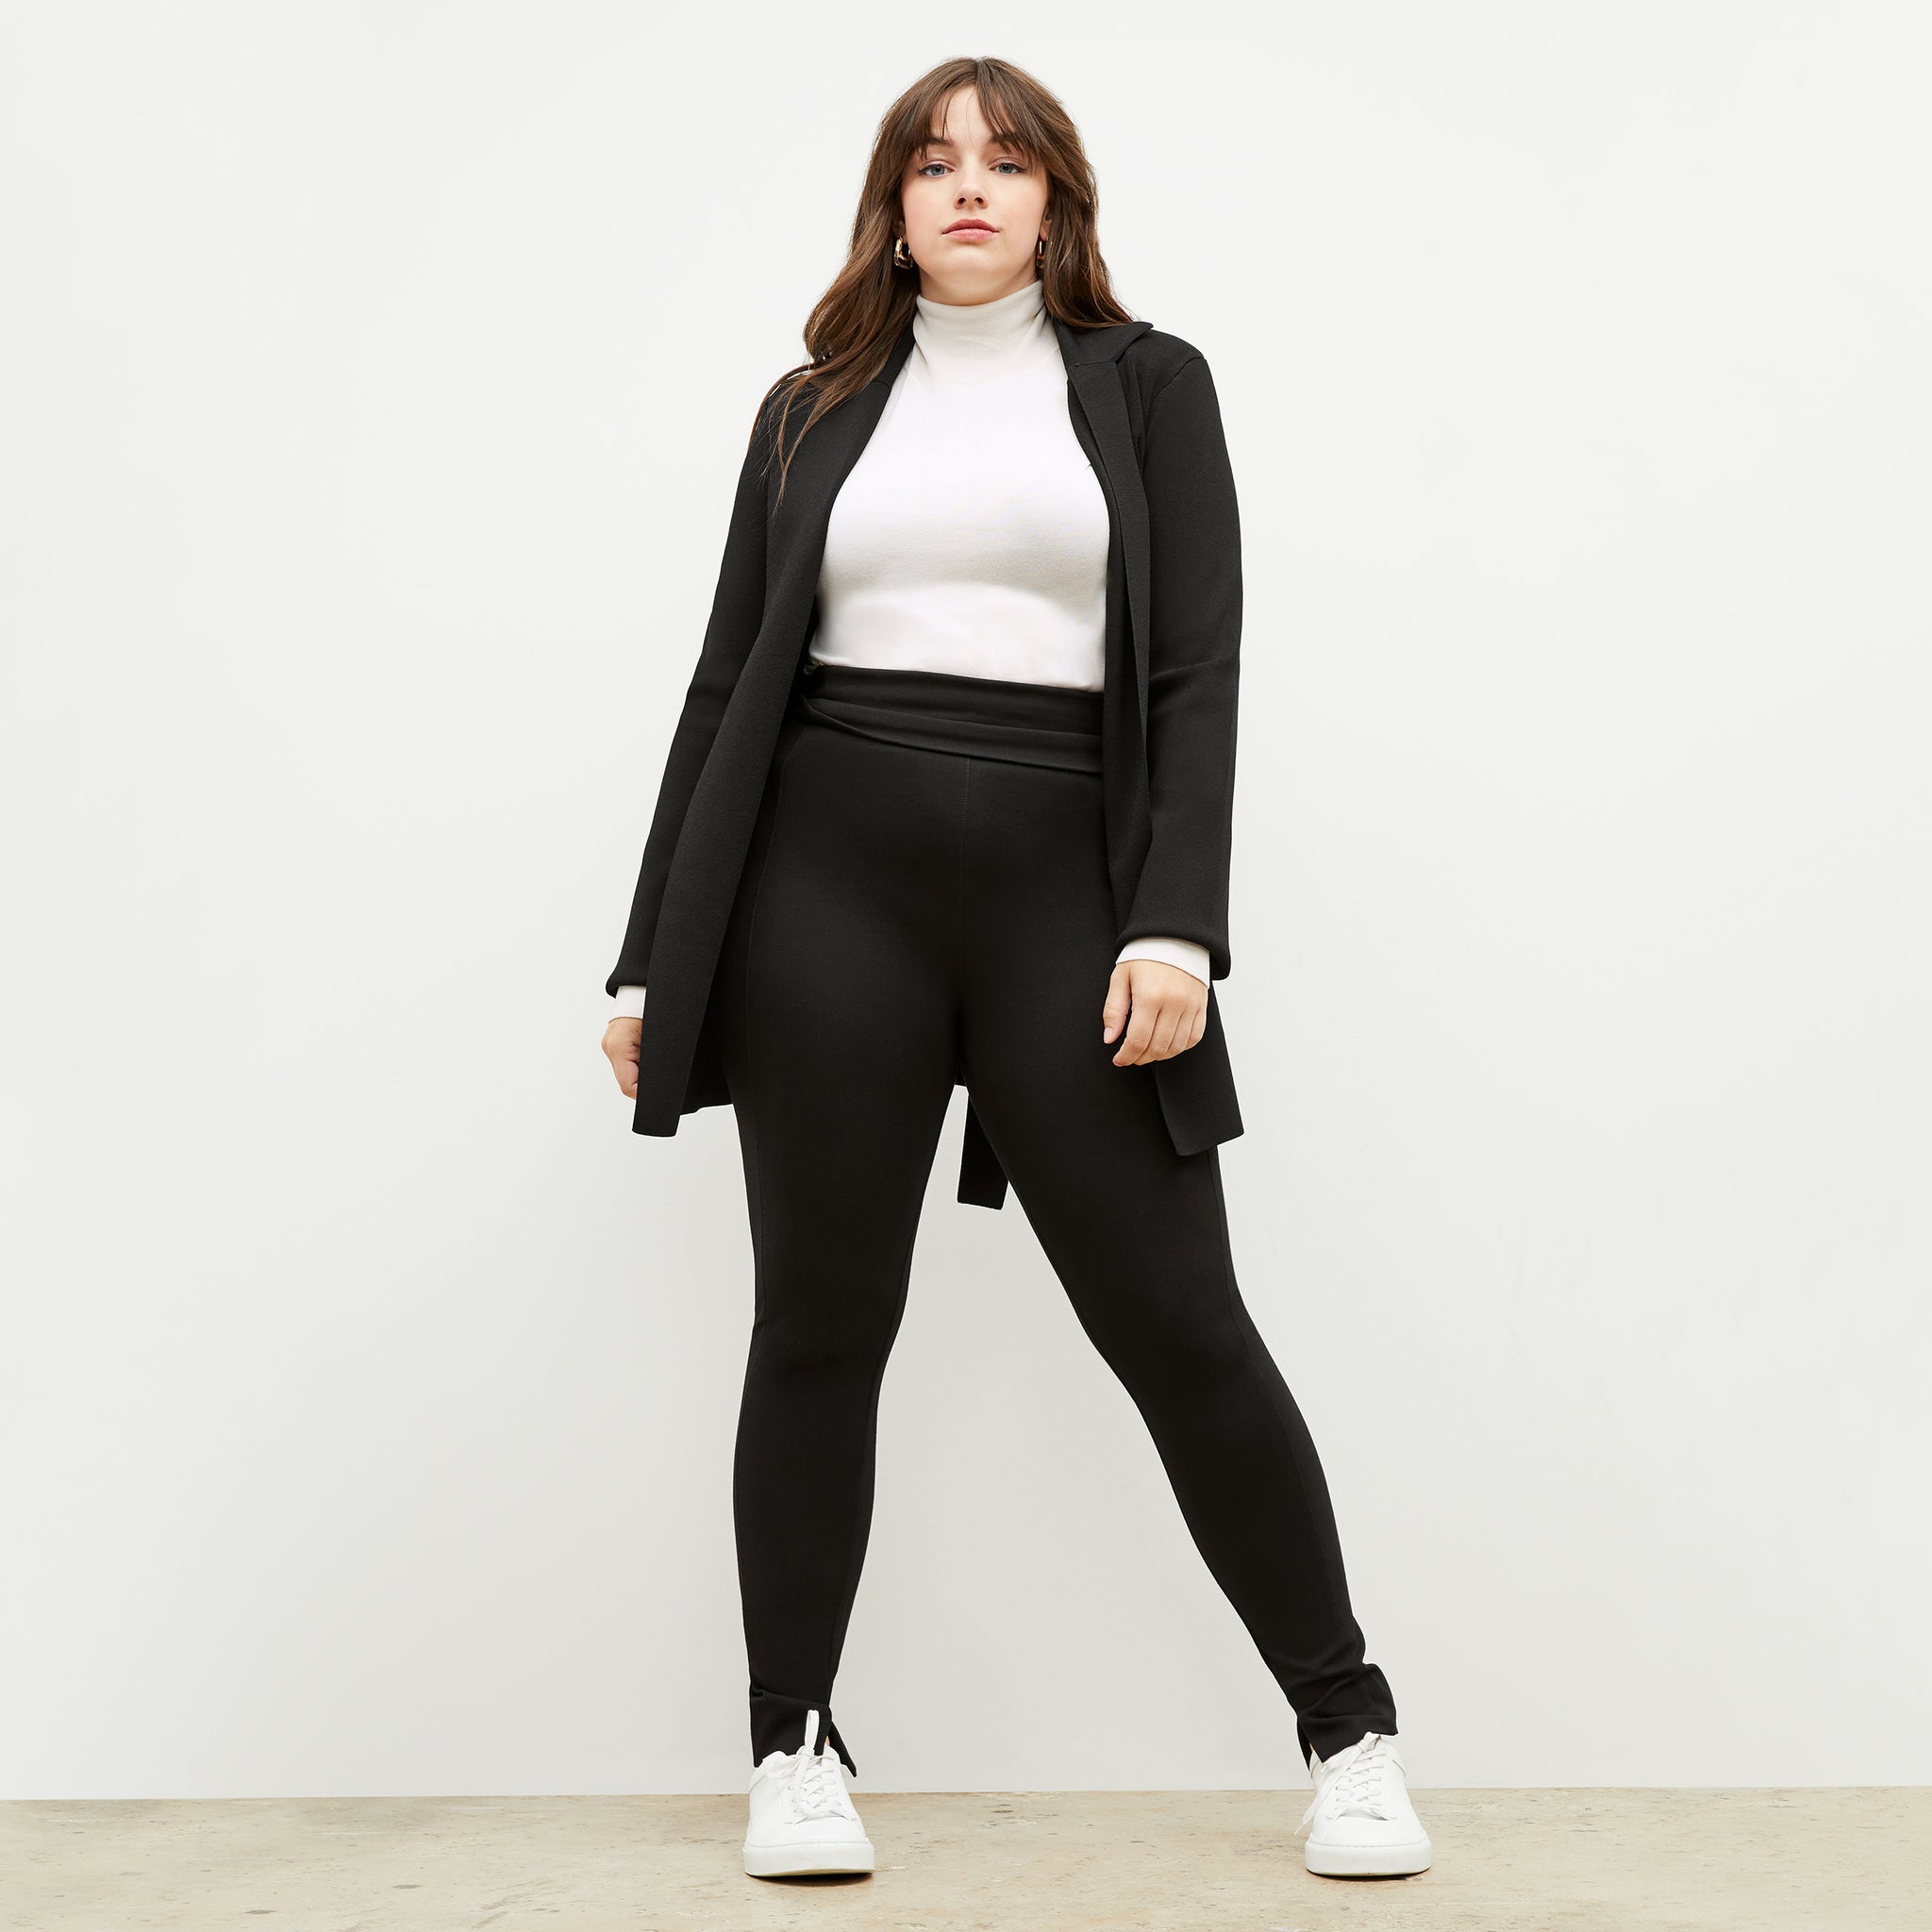 Stella Elyse by Yelete Seamless Performance Activewear Legging Full Length  Black